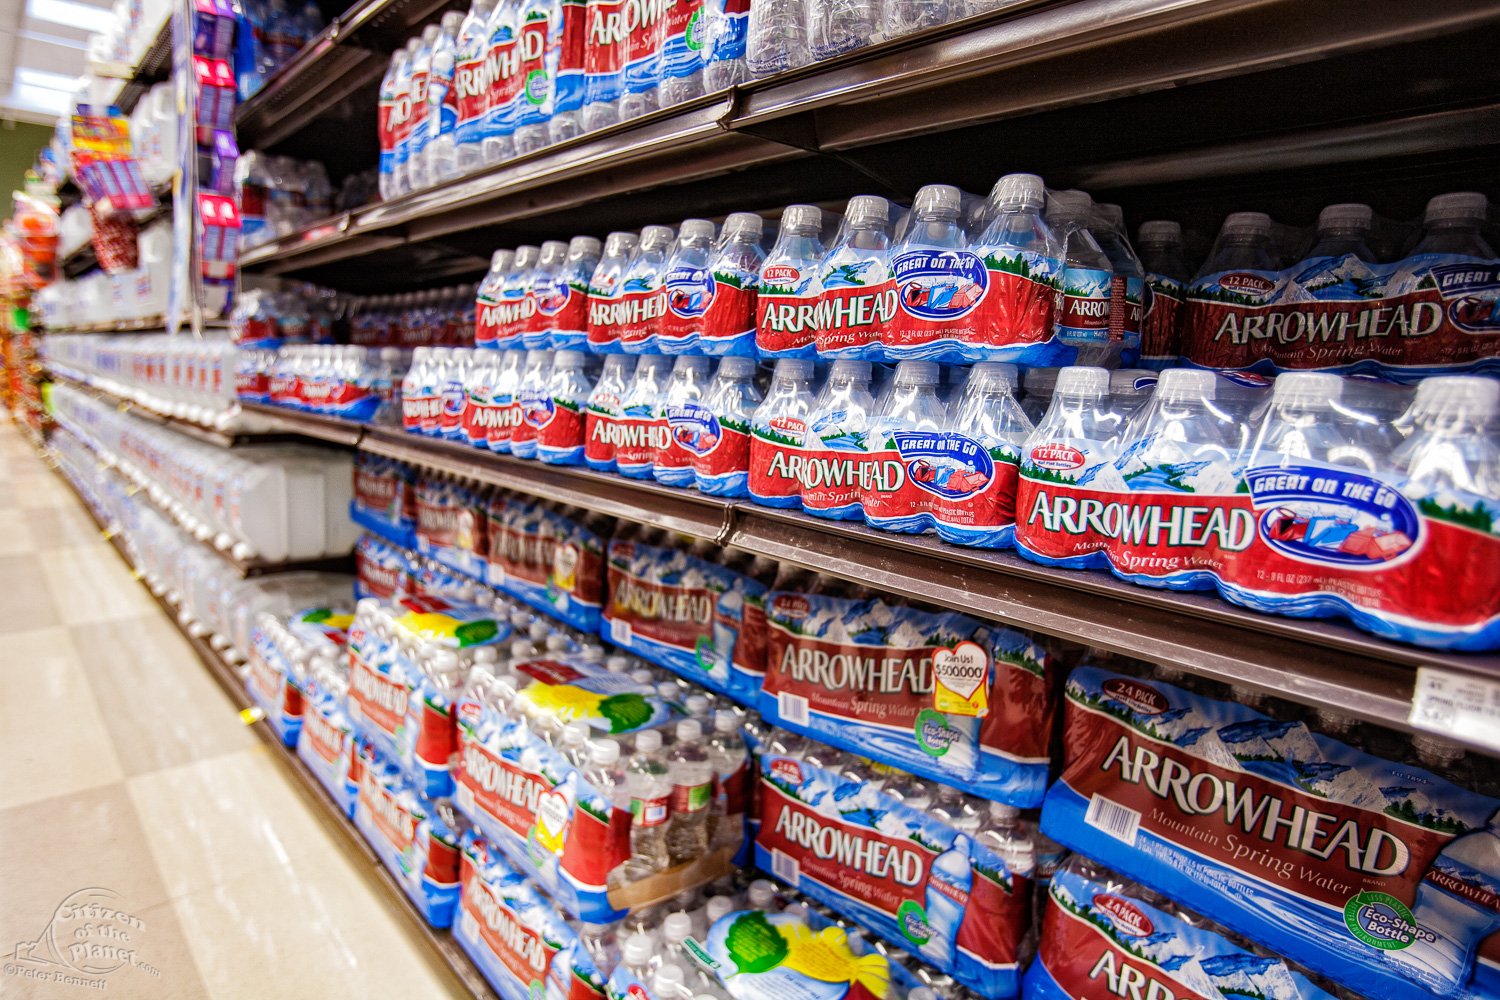  Plastic water bottles on shelves of supermarket, Los Angeles, California, USA 